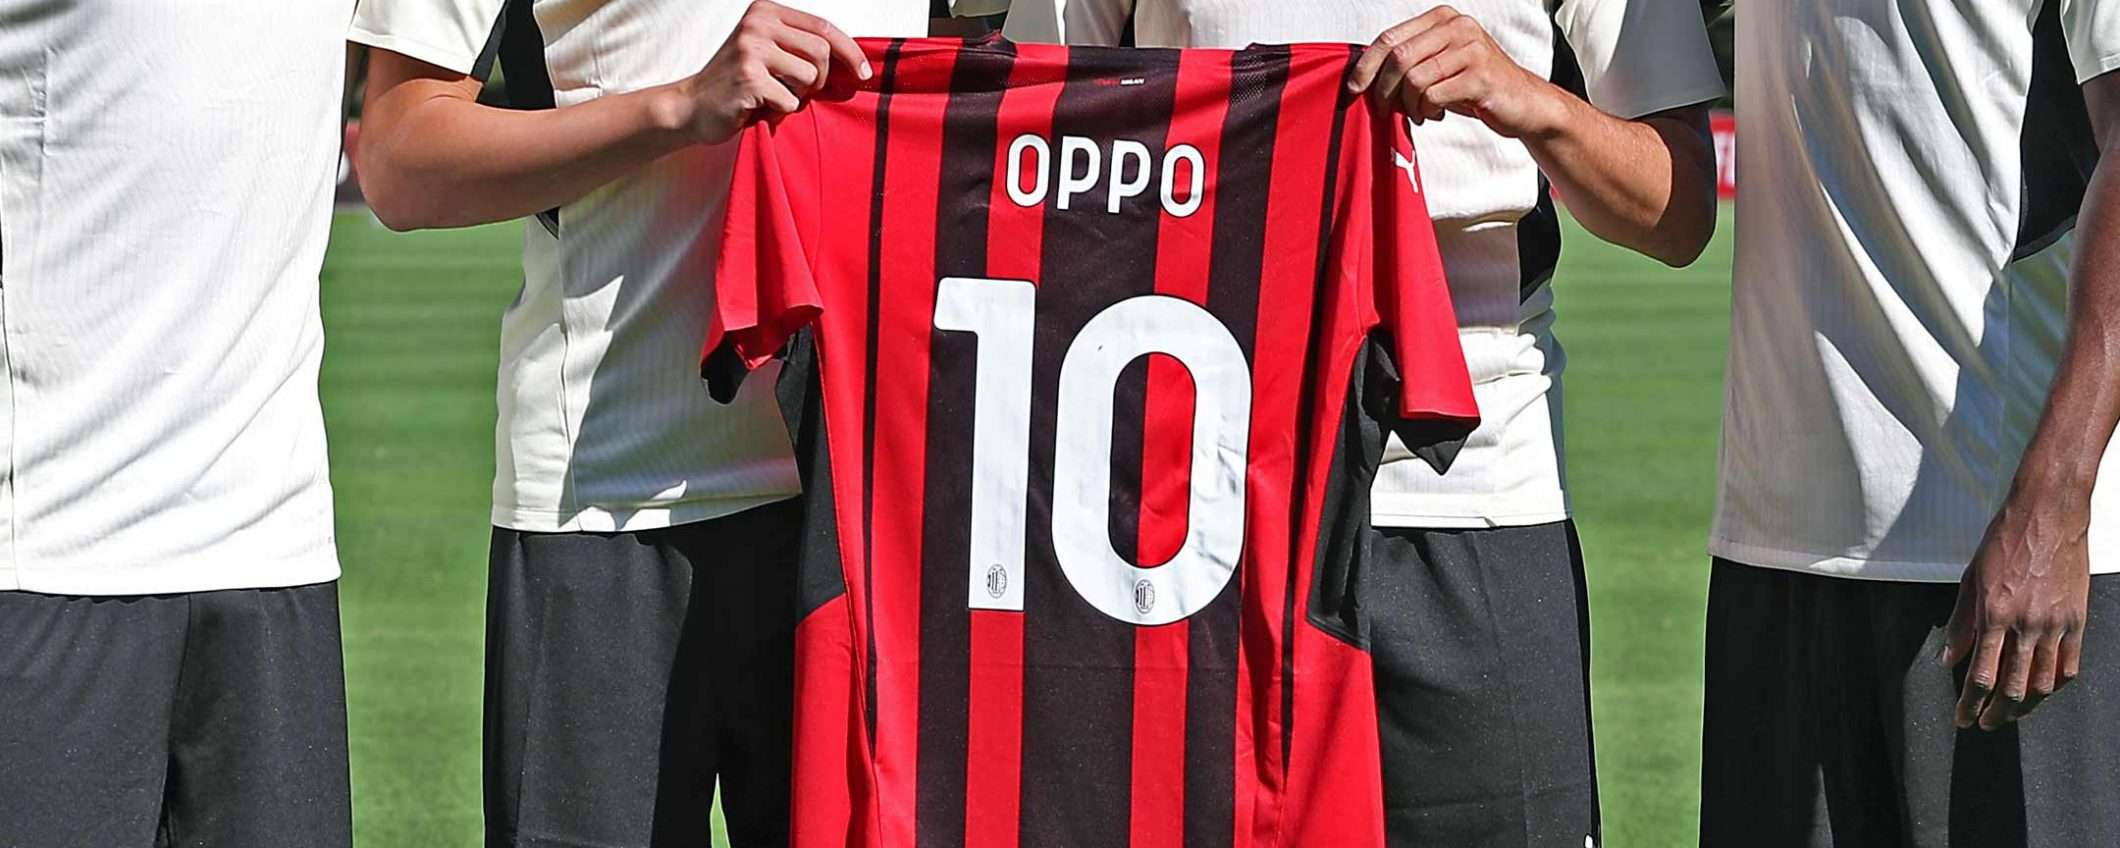 OPPO Italia è Official Mobile Partner del Milan